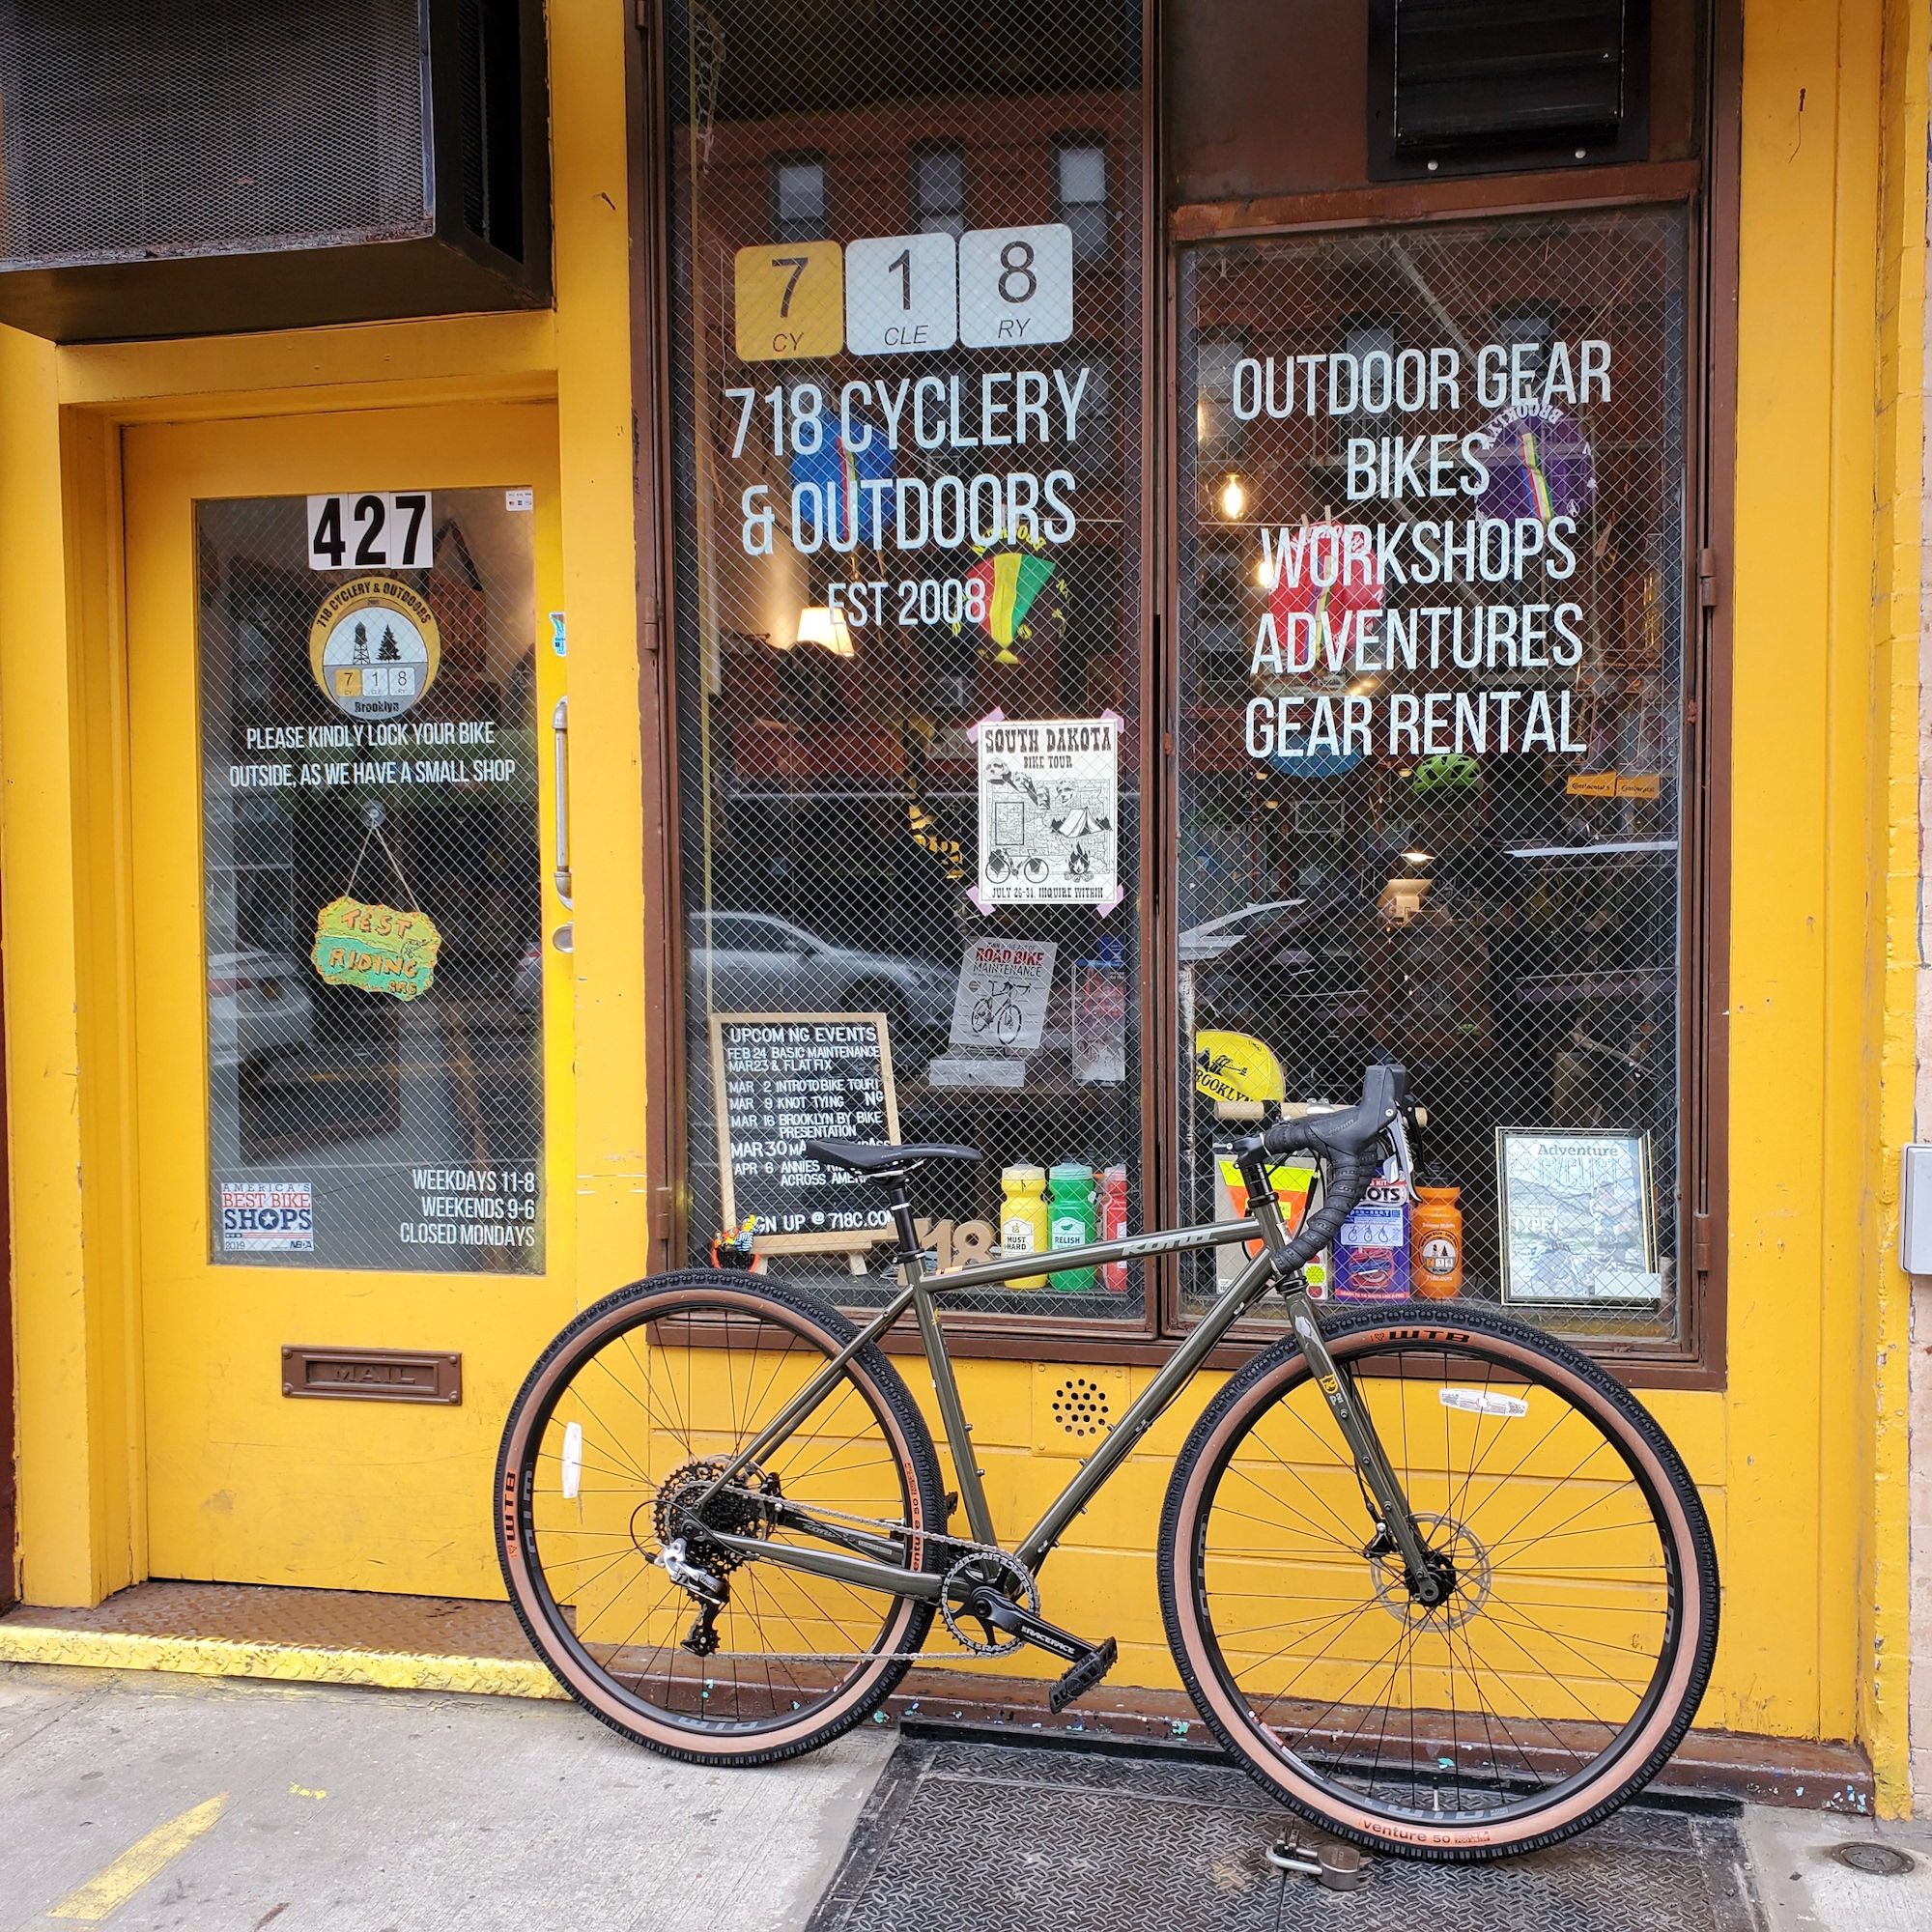 The 10 best bike shops in New York City 6sqft